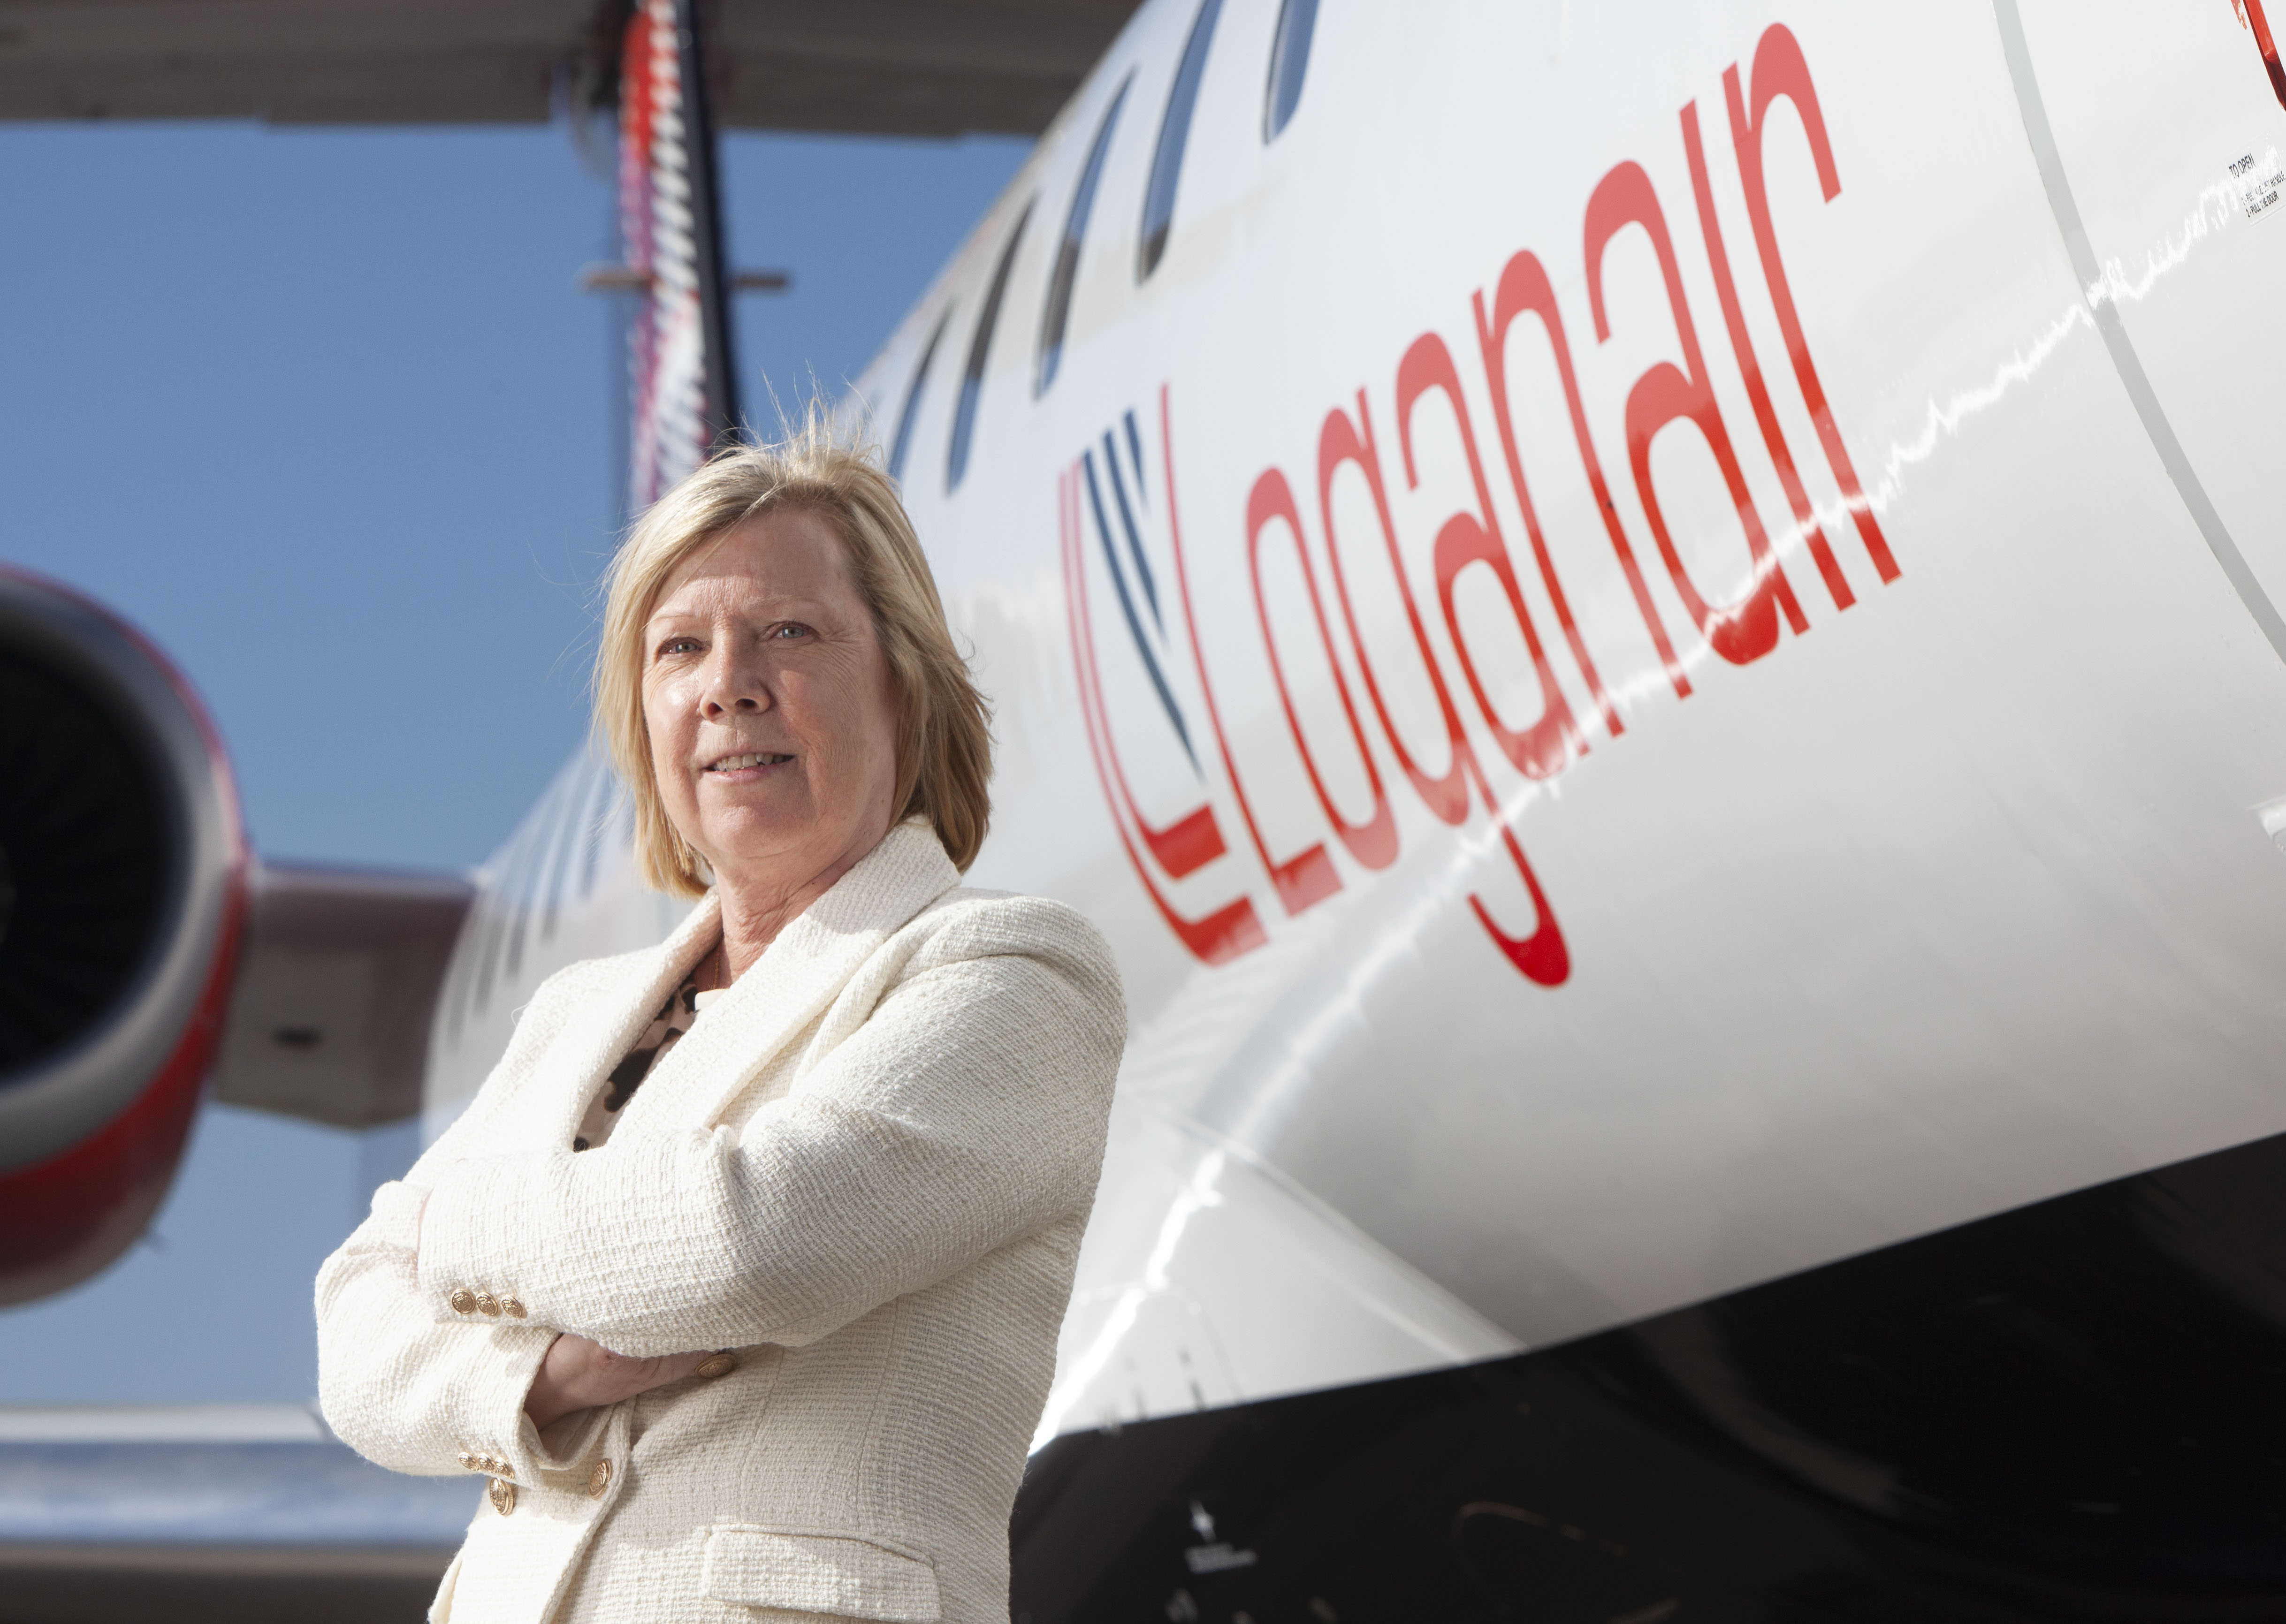 Loganair summer 2022 schedule sees airline return to European skies